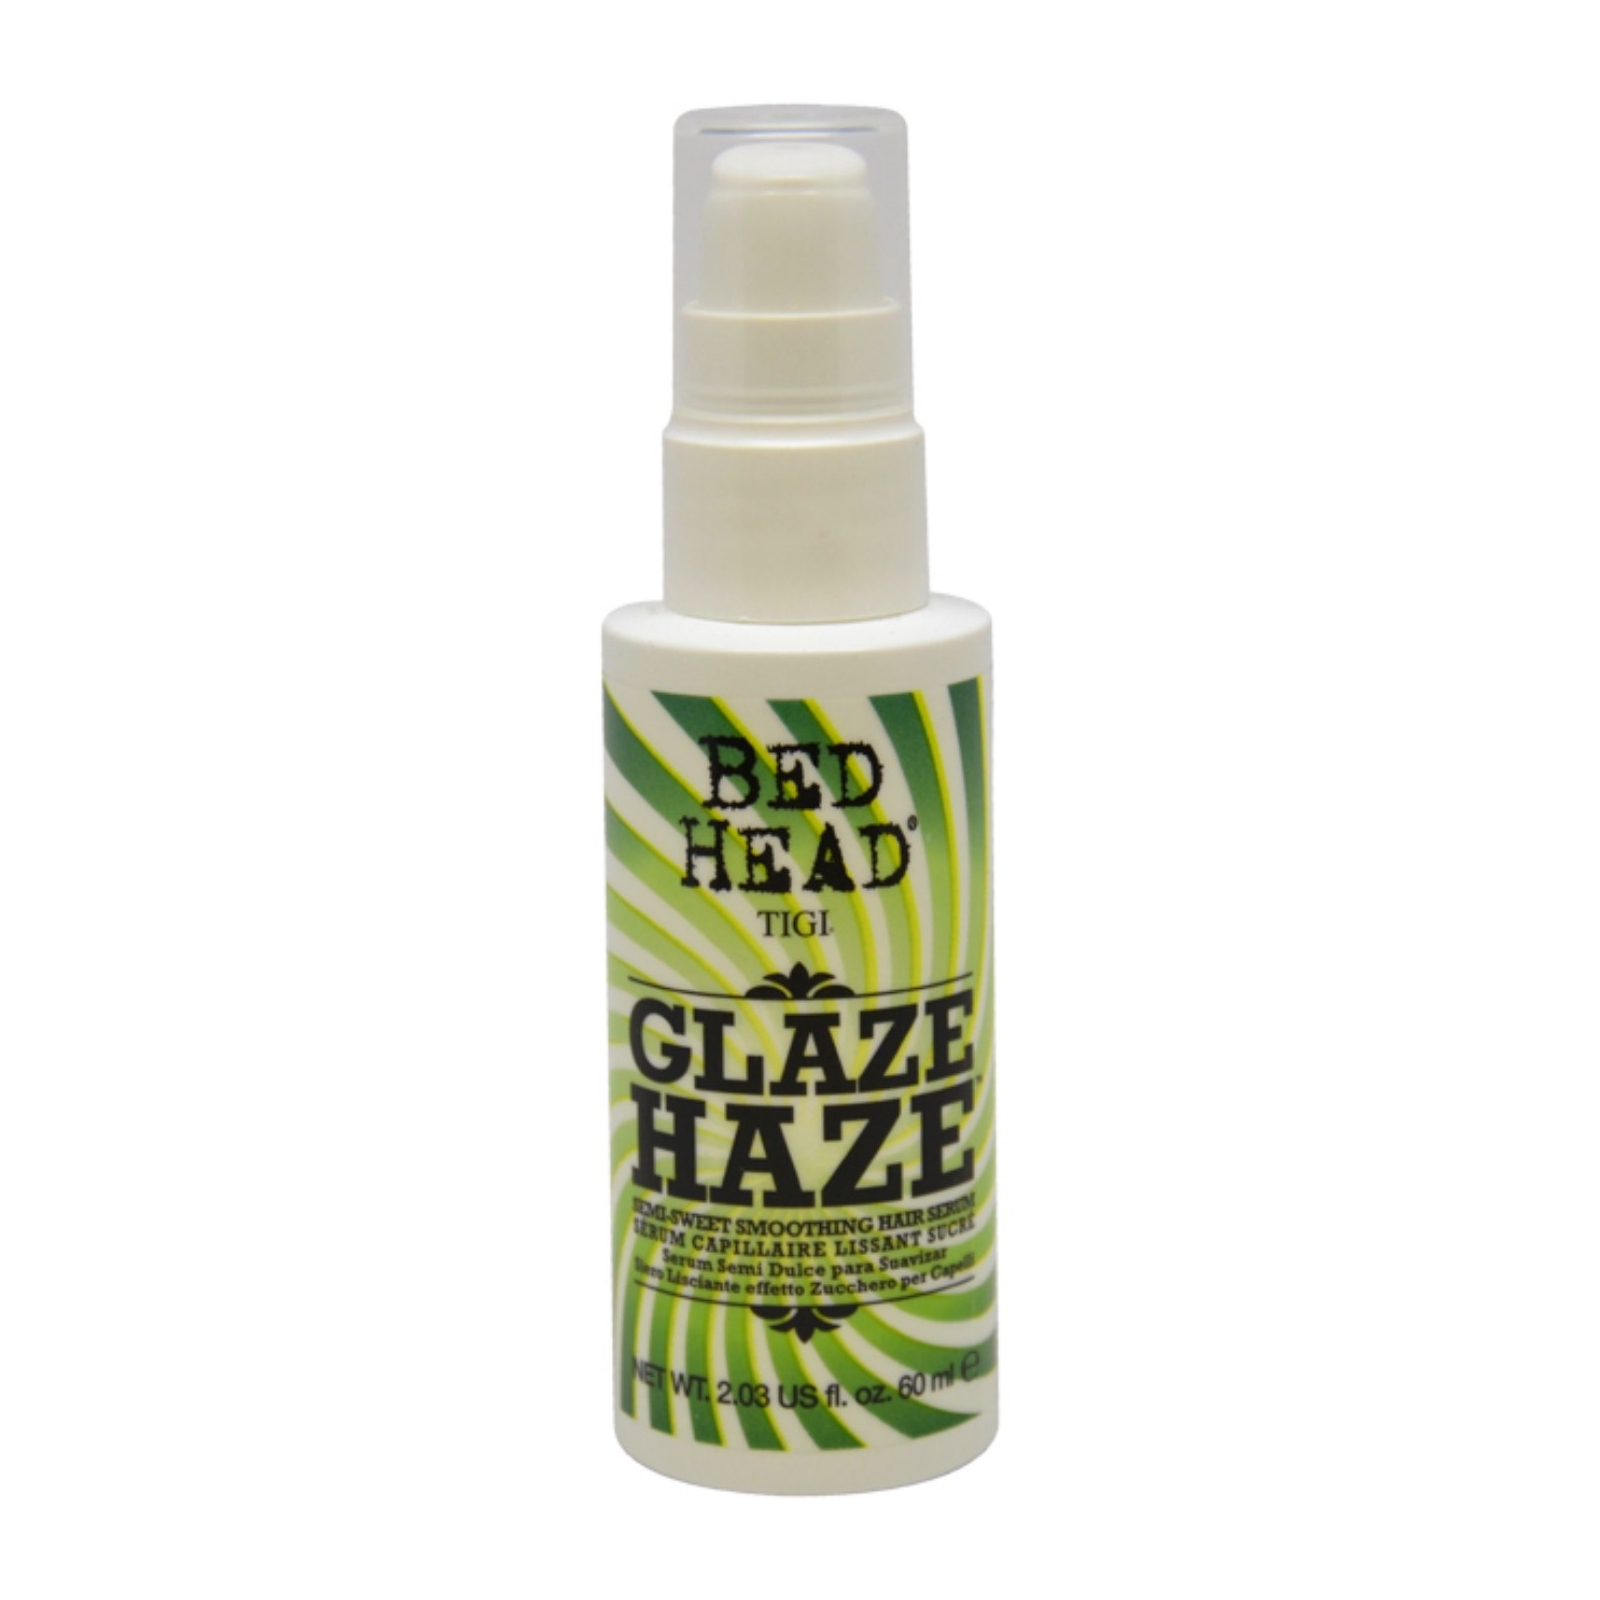 Tigi Bed Head Glaze Haze Semi-Sweet Smoothing Hair Serum by  for Unisex - 2.03 oz Serum